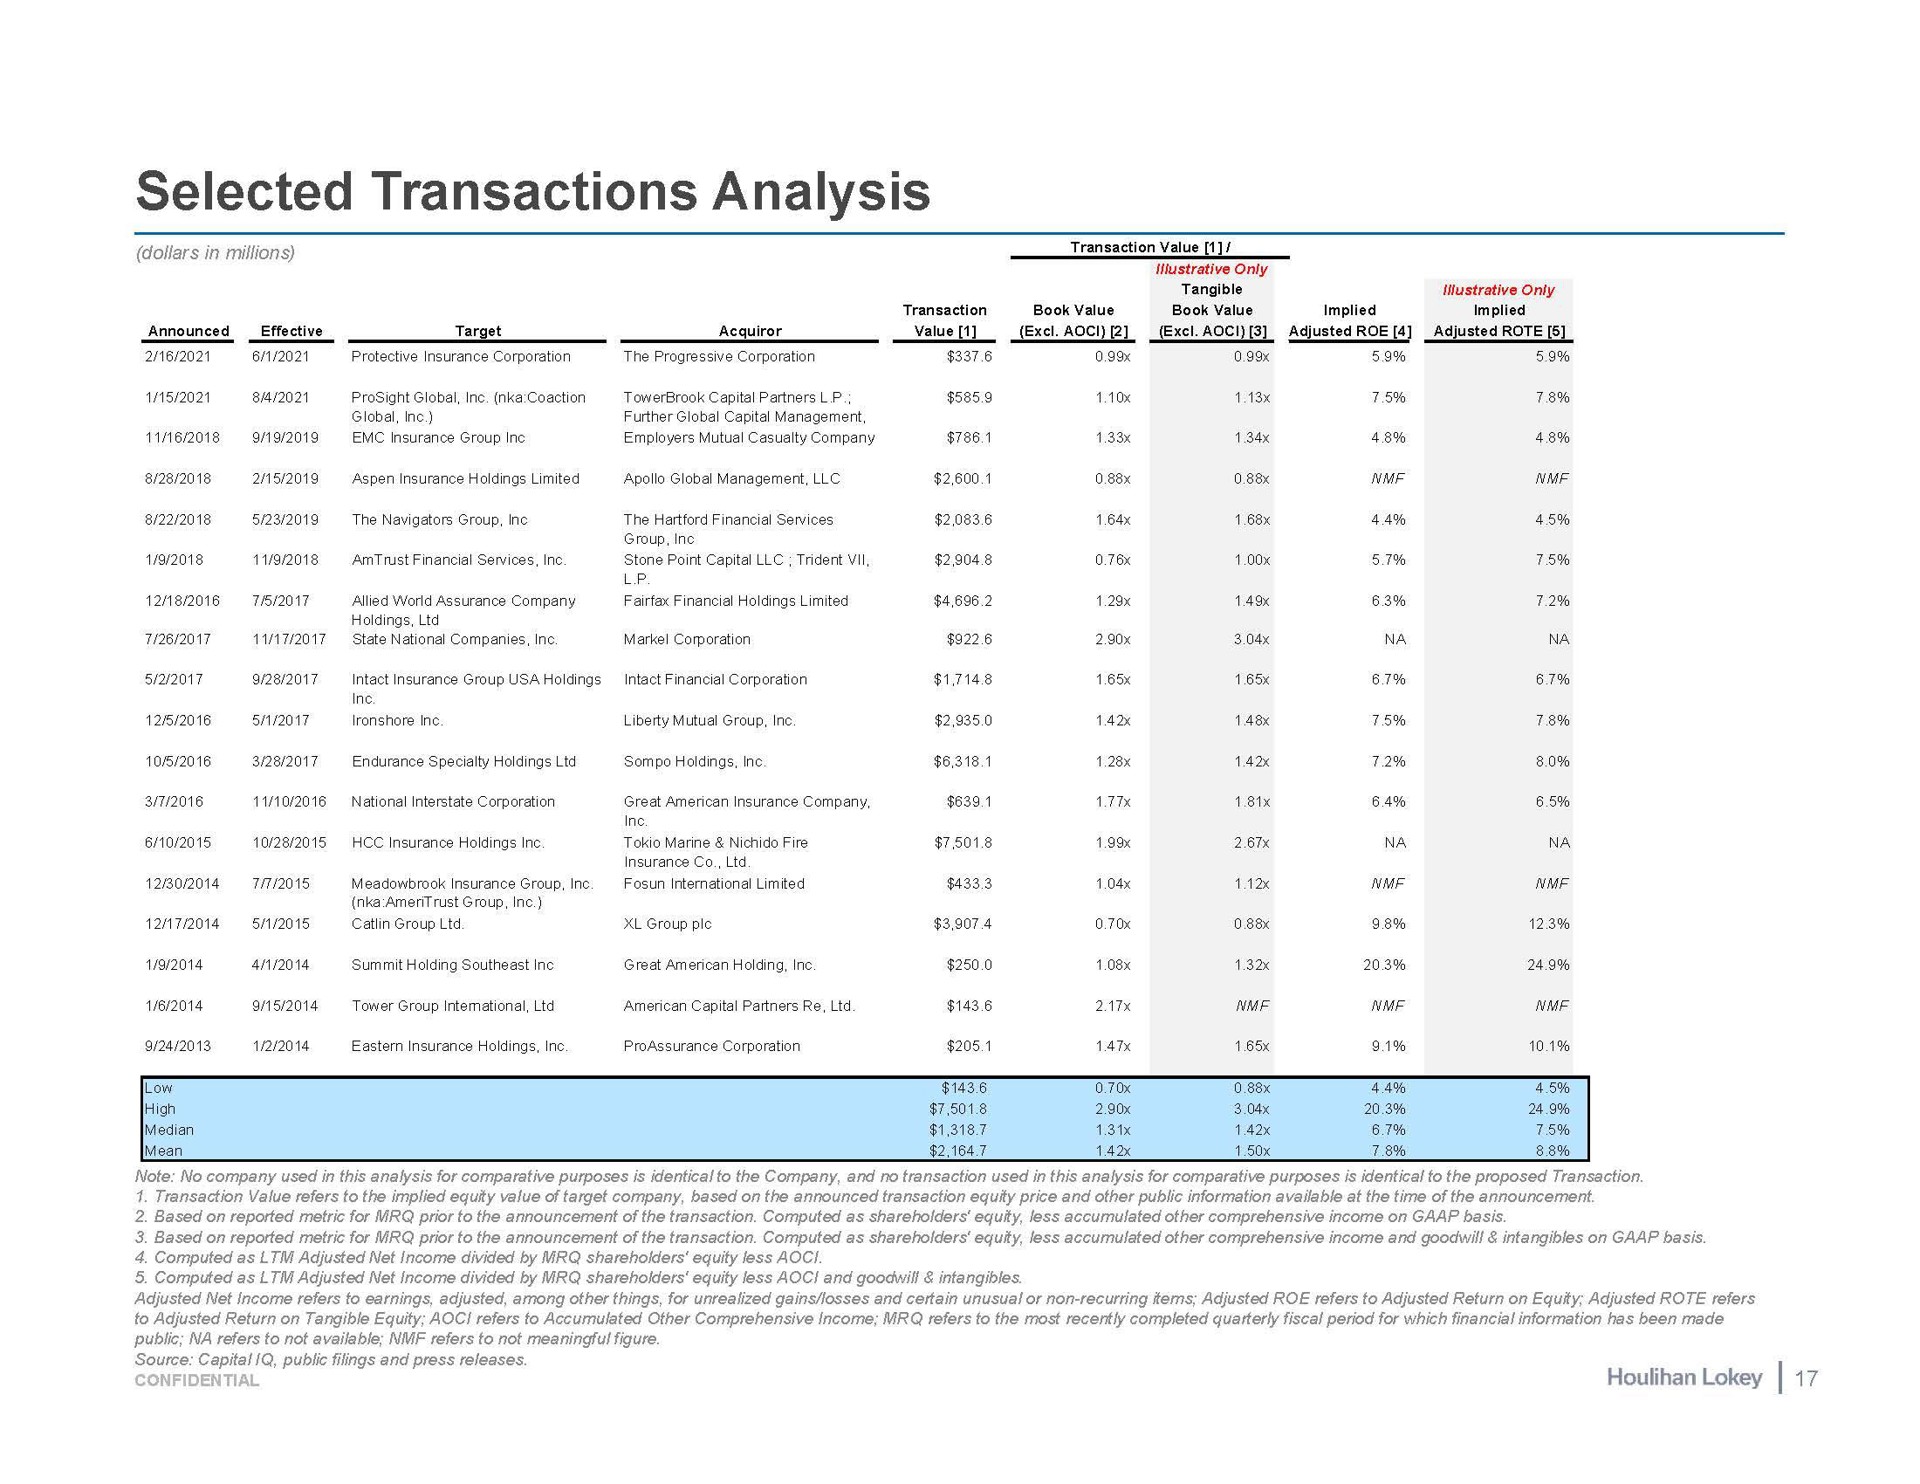 selected transactions analysis | Houlihan Lokey